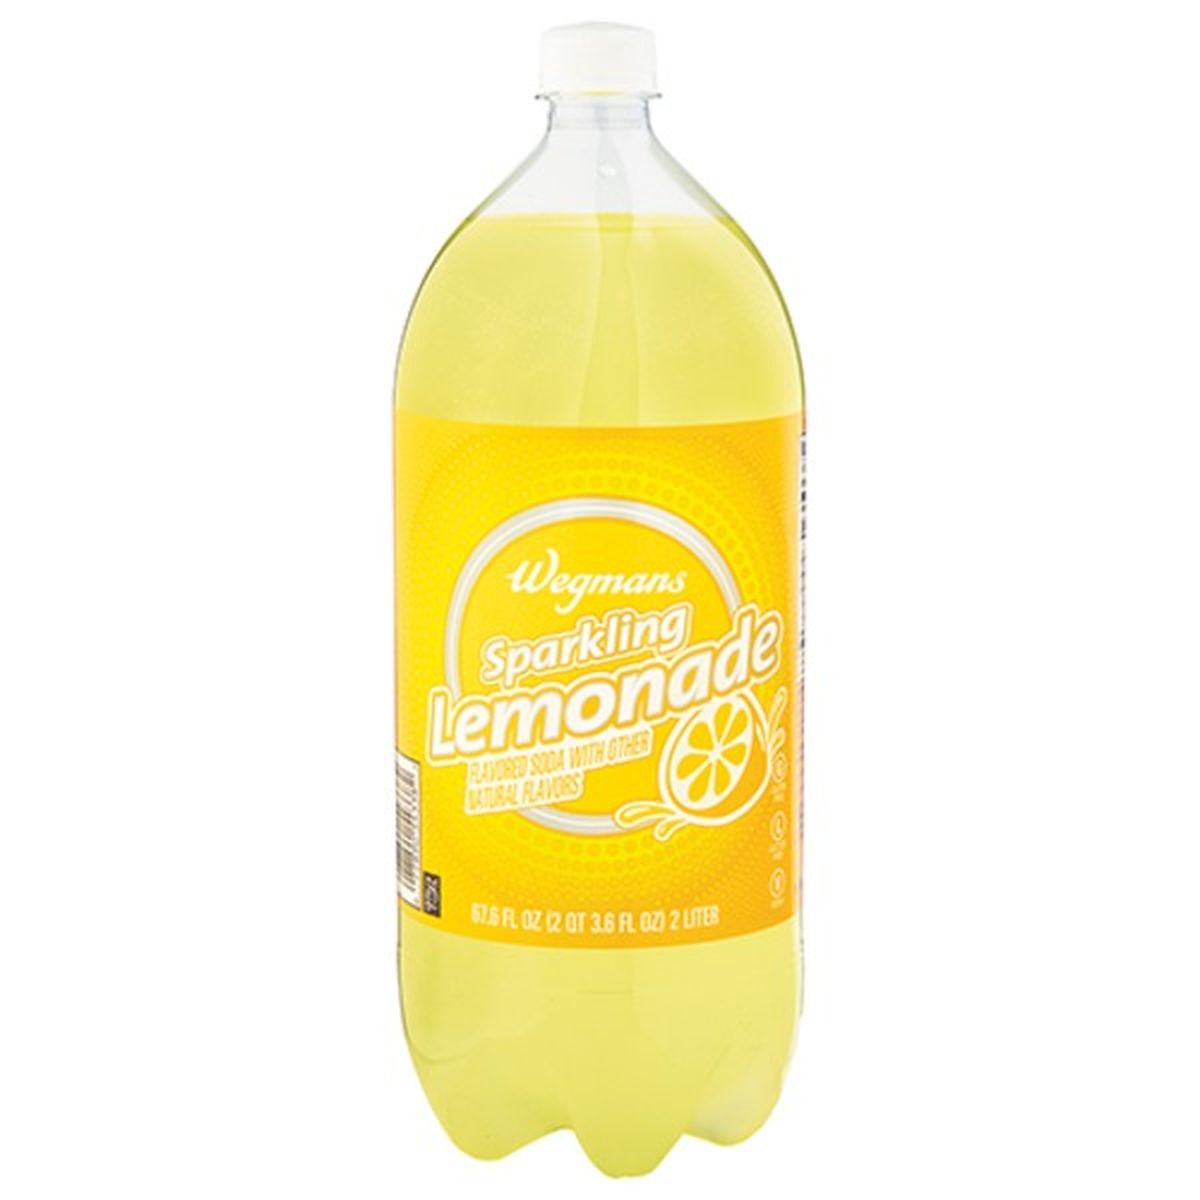 Calories in Wegmans Sparkling Lemonade